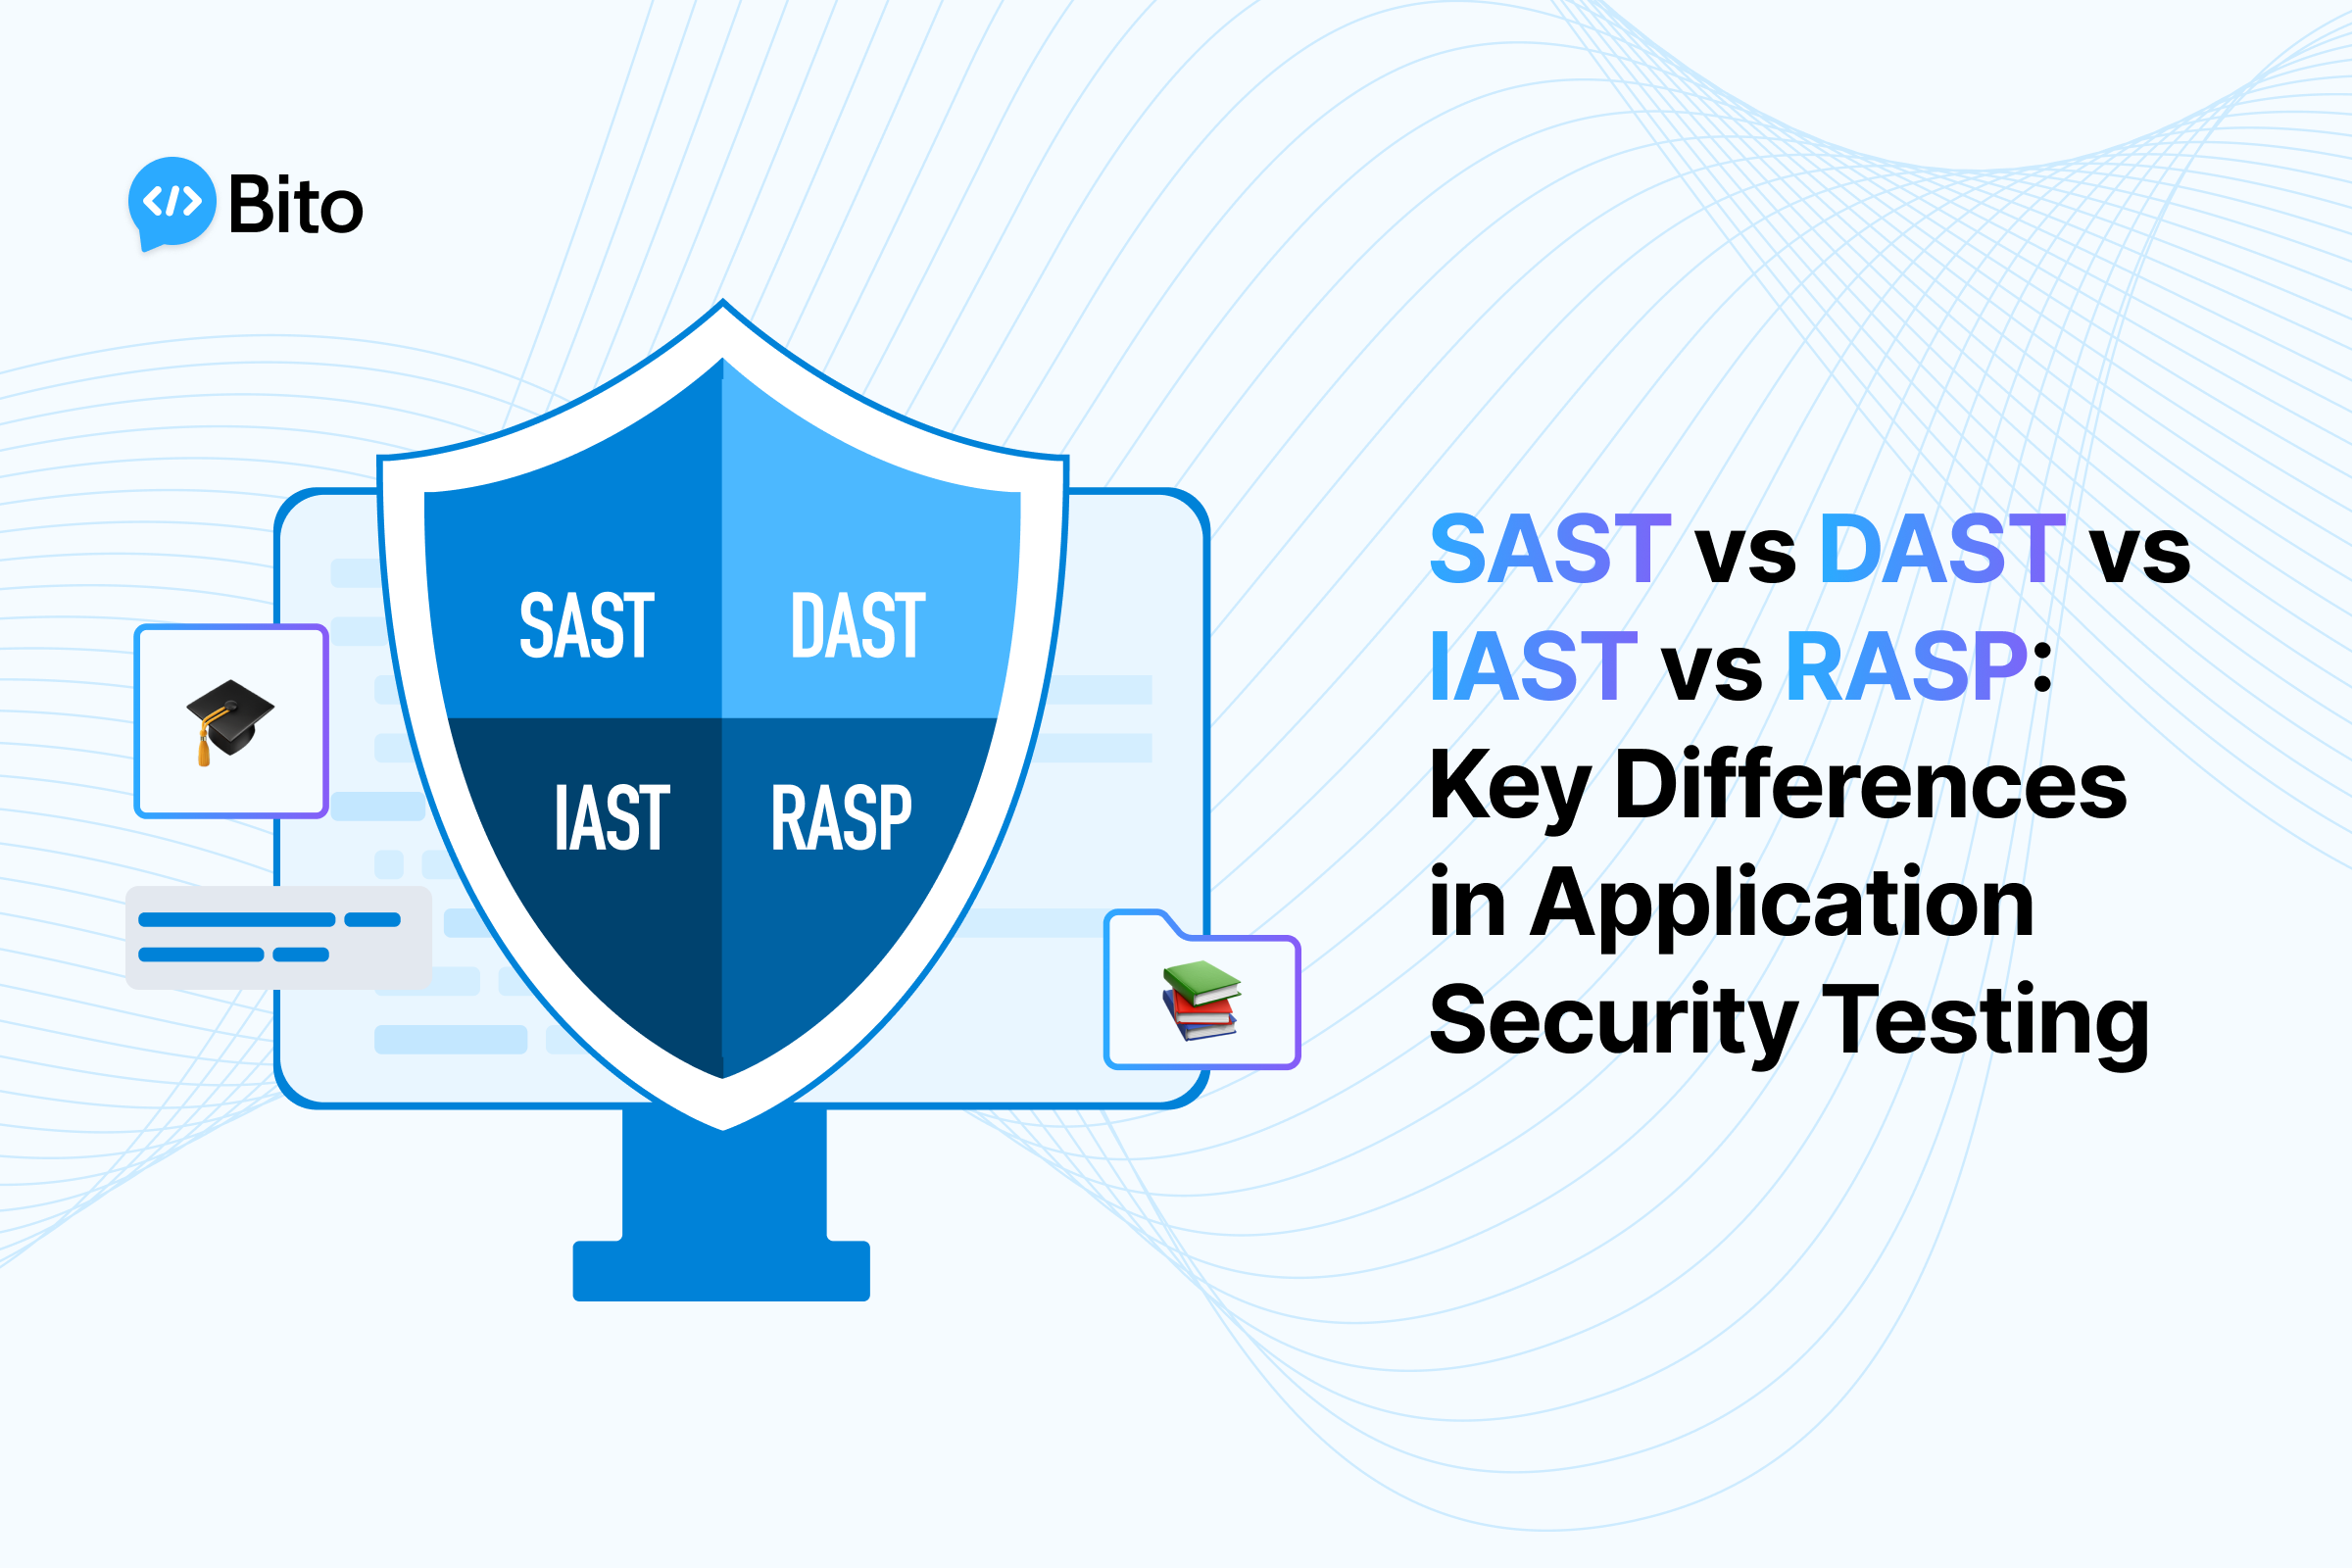 SAST vs DAST vs IAST vs RASP: Key Differences in Application Security Testing